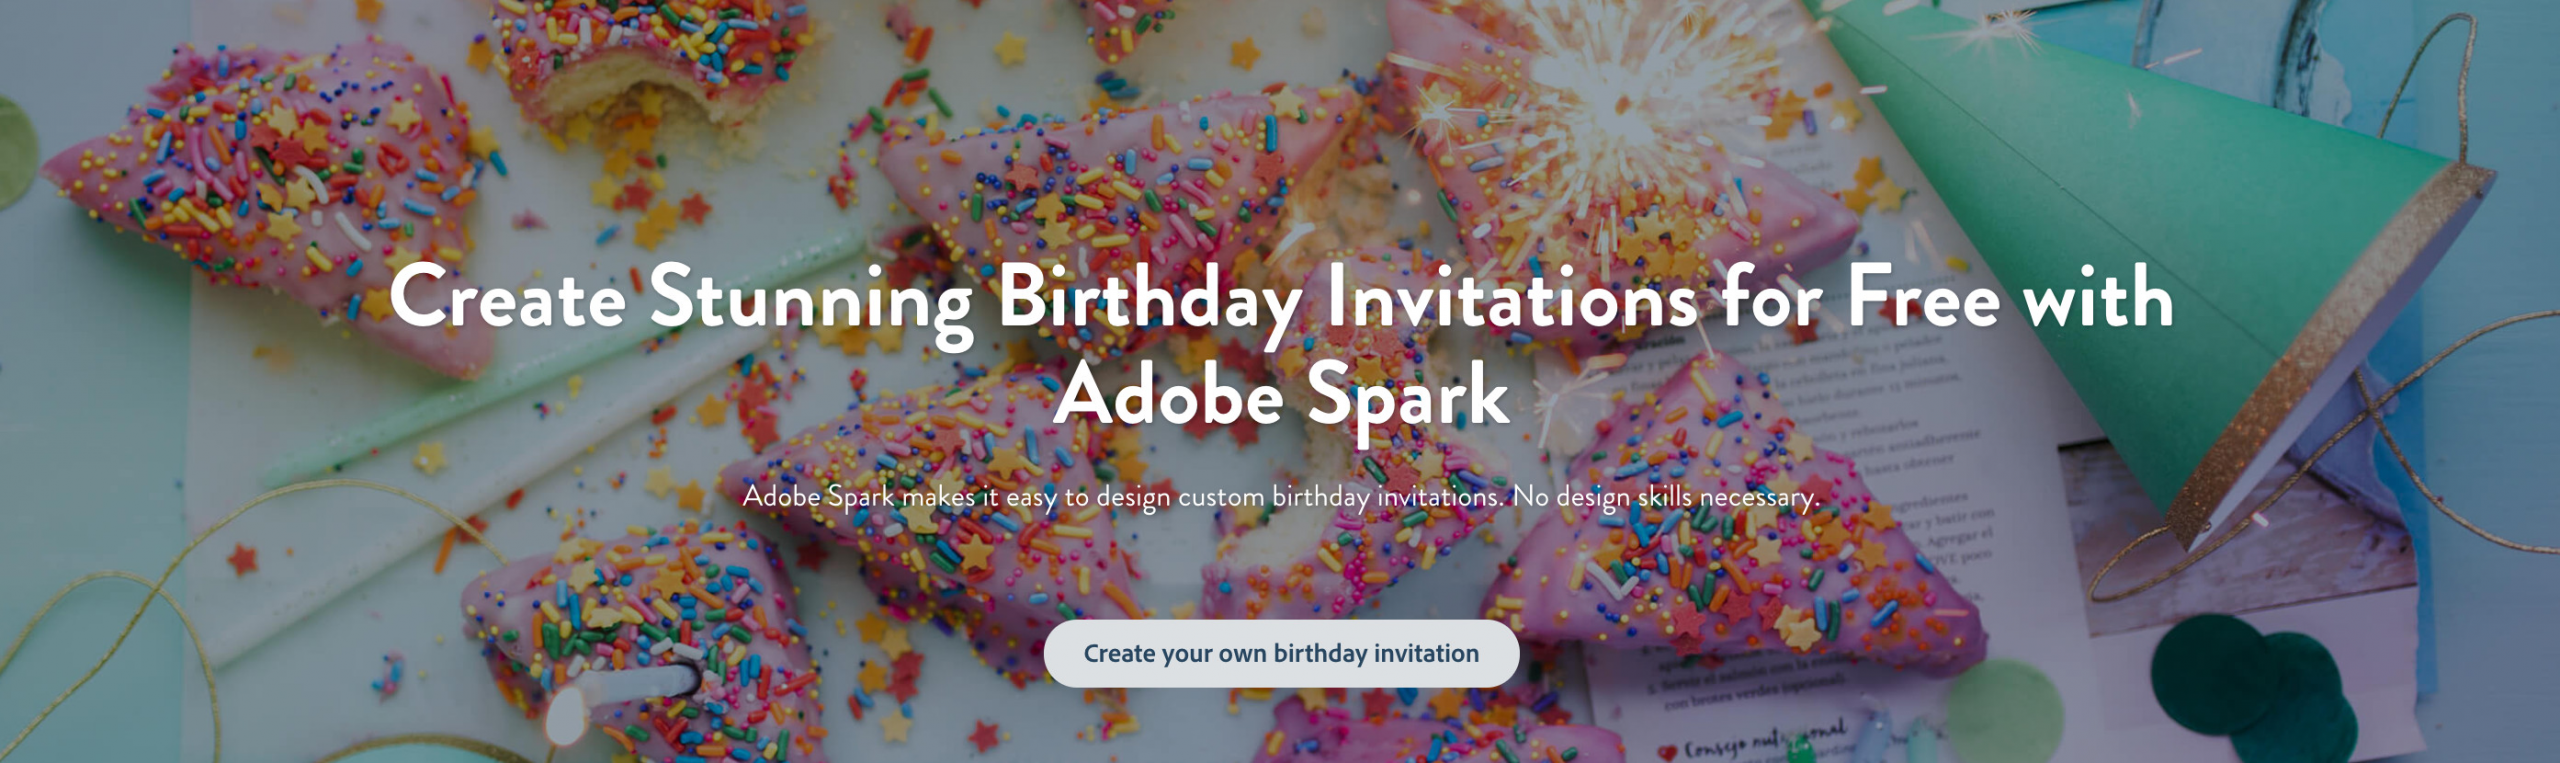 Make Birthday Invitations Online Free
 Make Your Own Birthday Invitations for Free